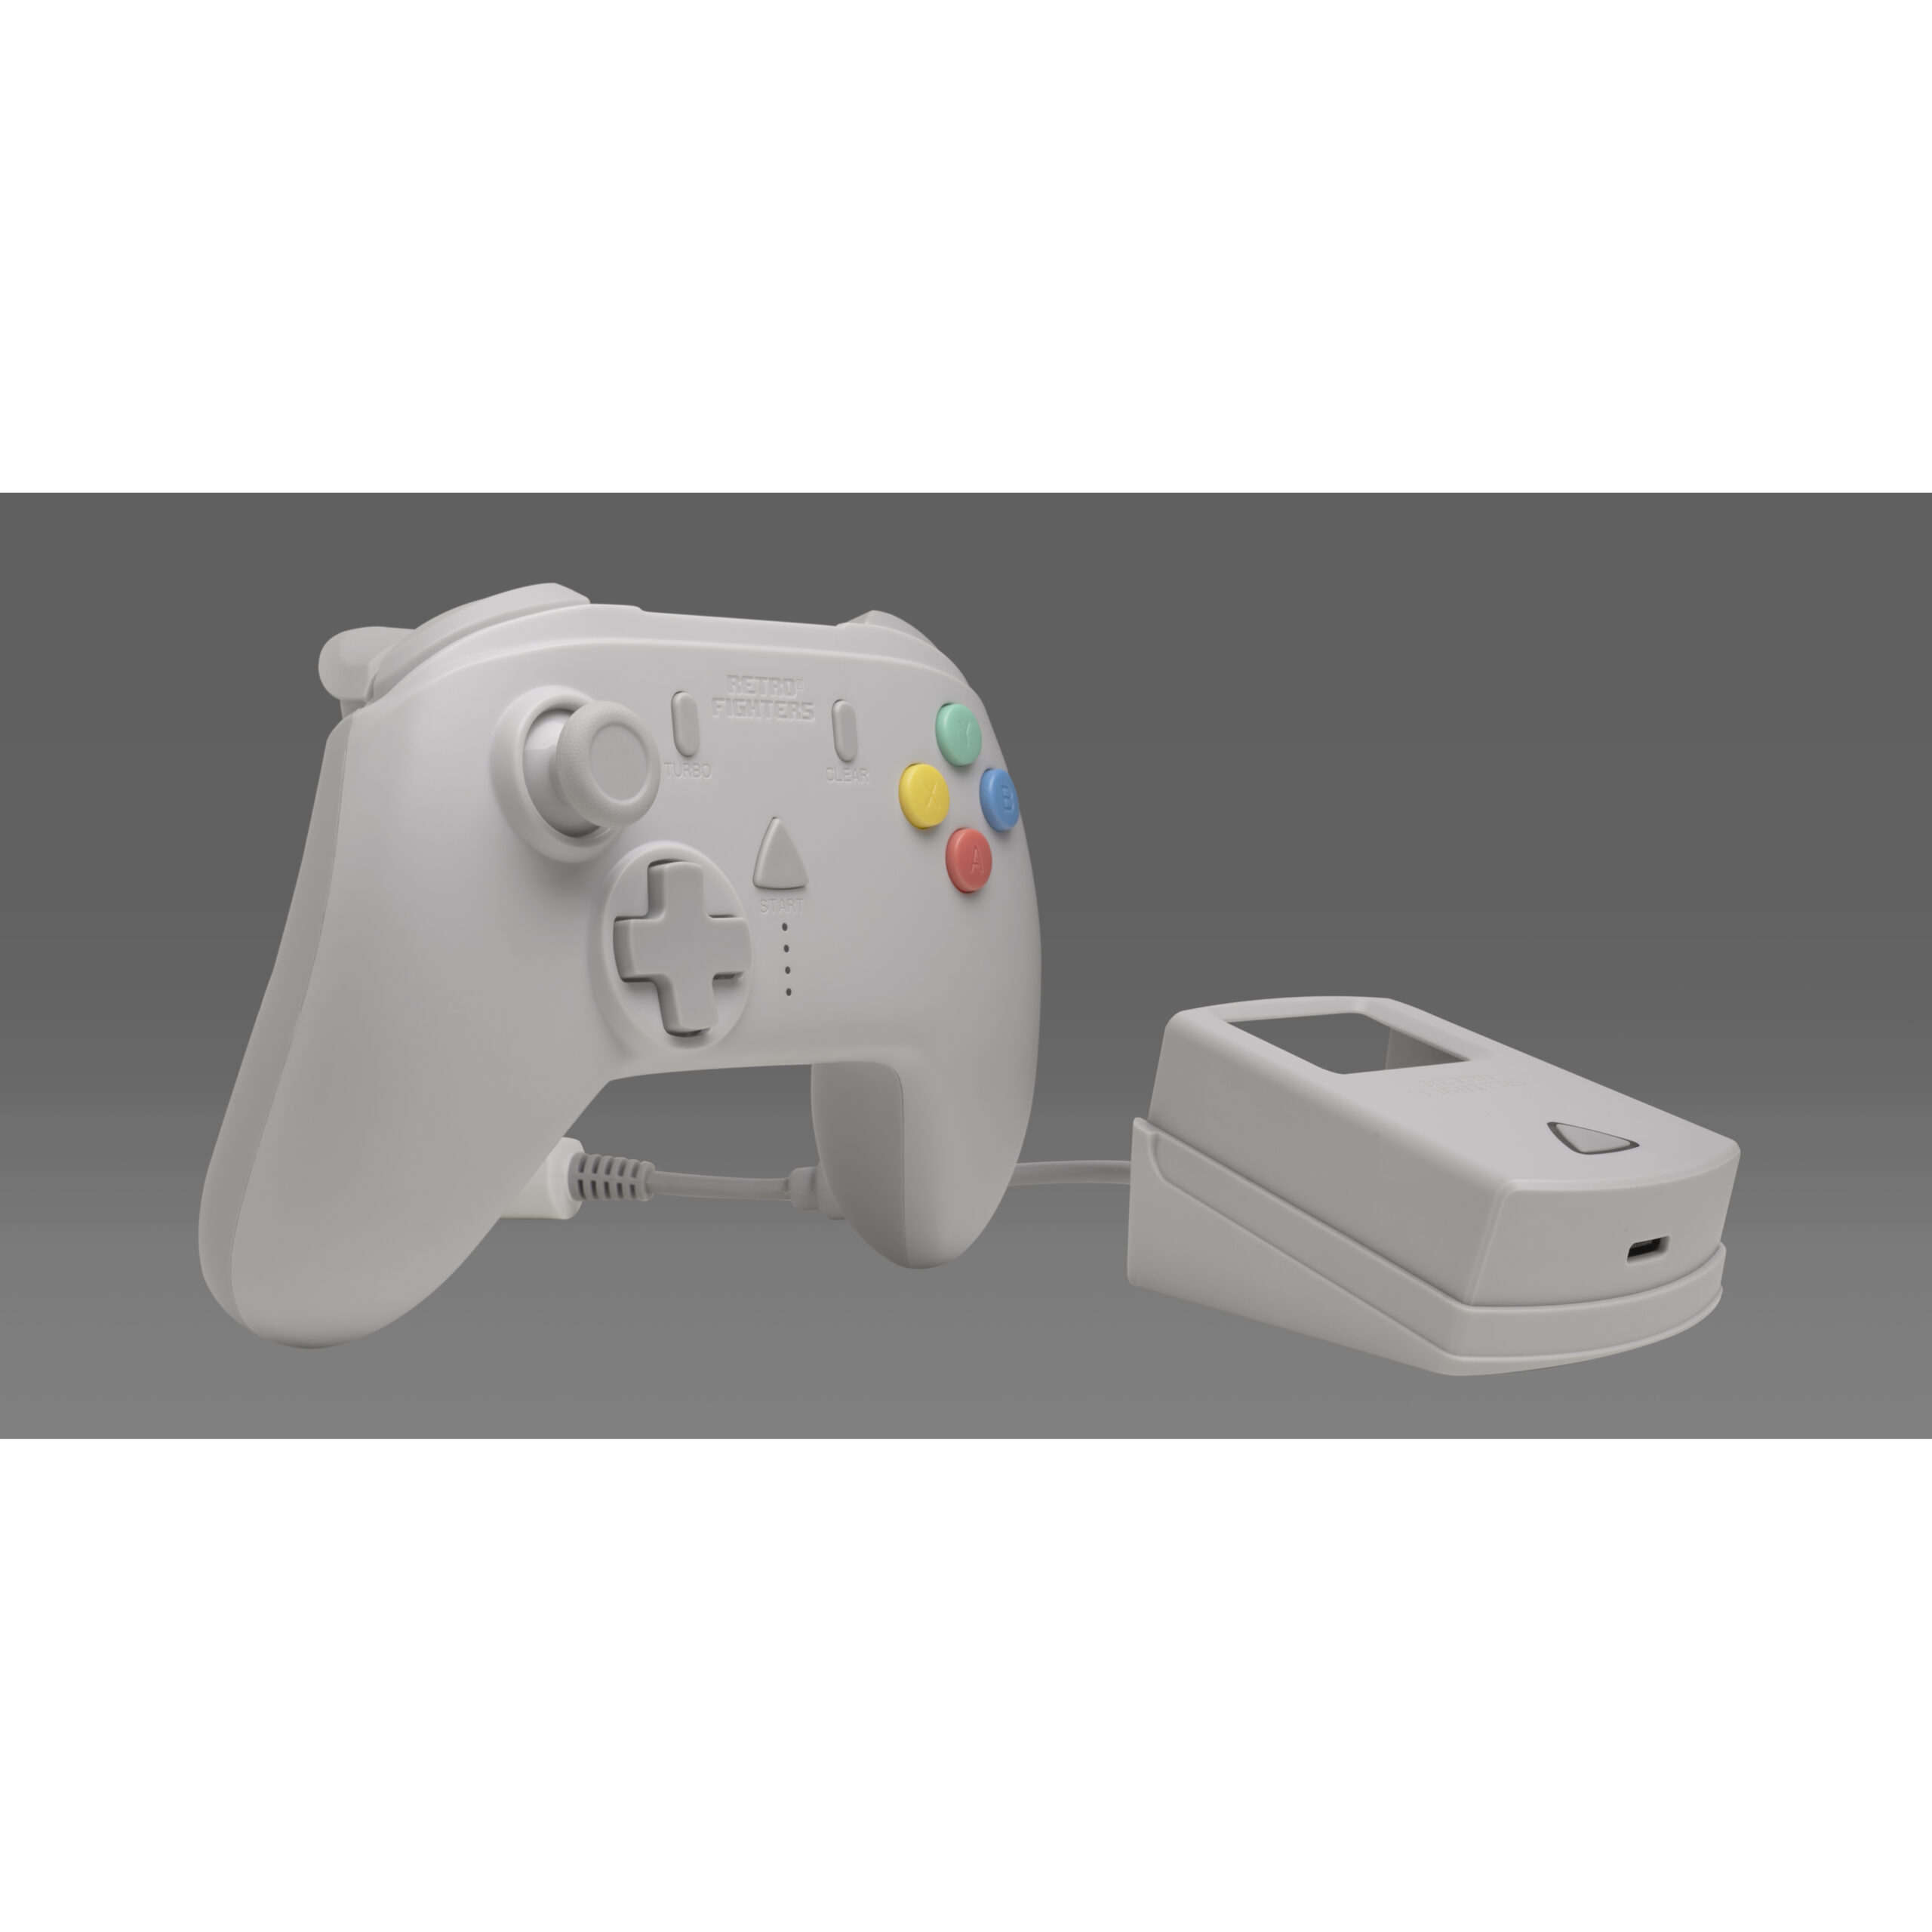 Retro Fighters StrikerDC Wireless Dreamcast Controller (12)